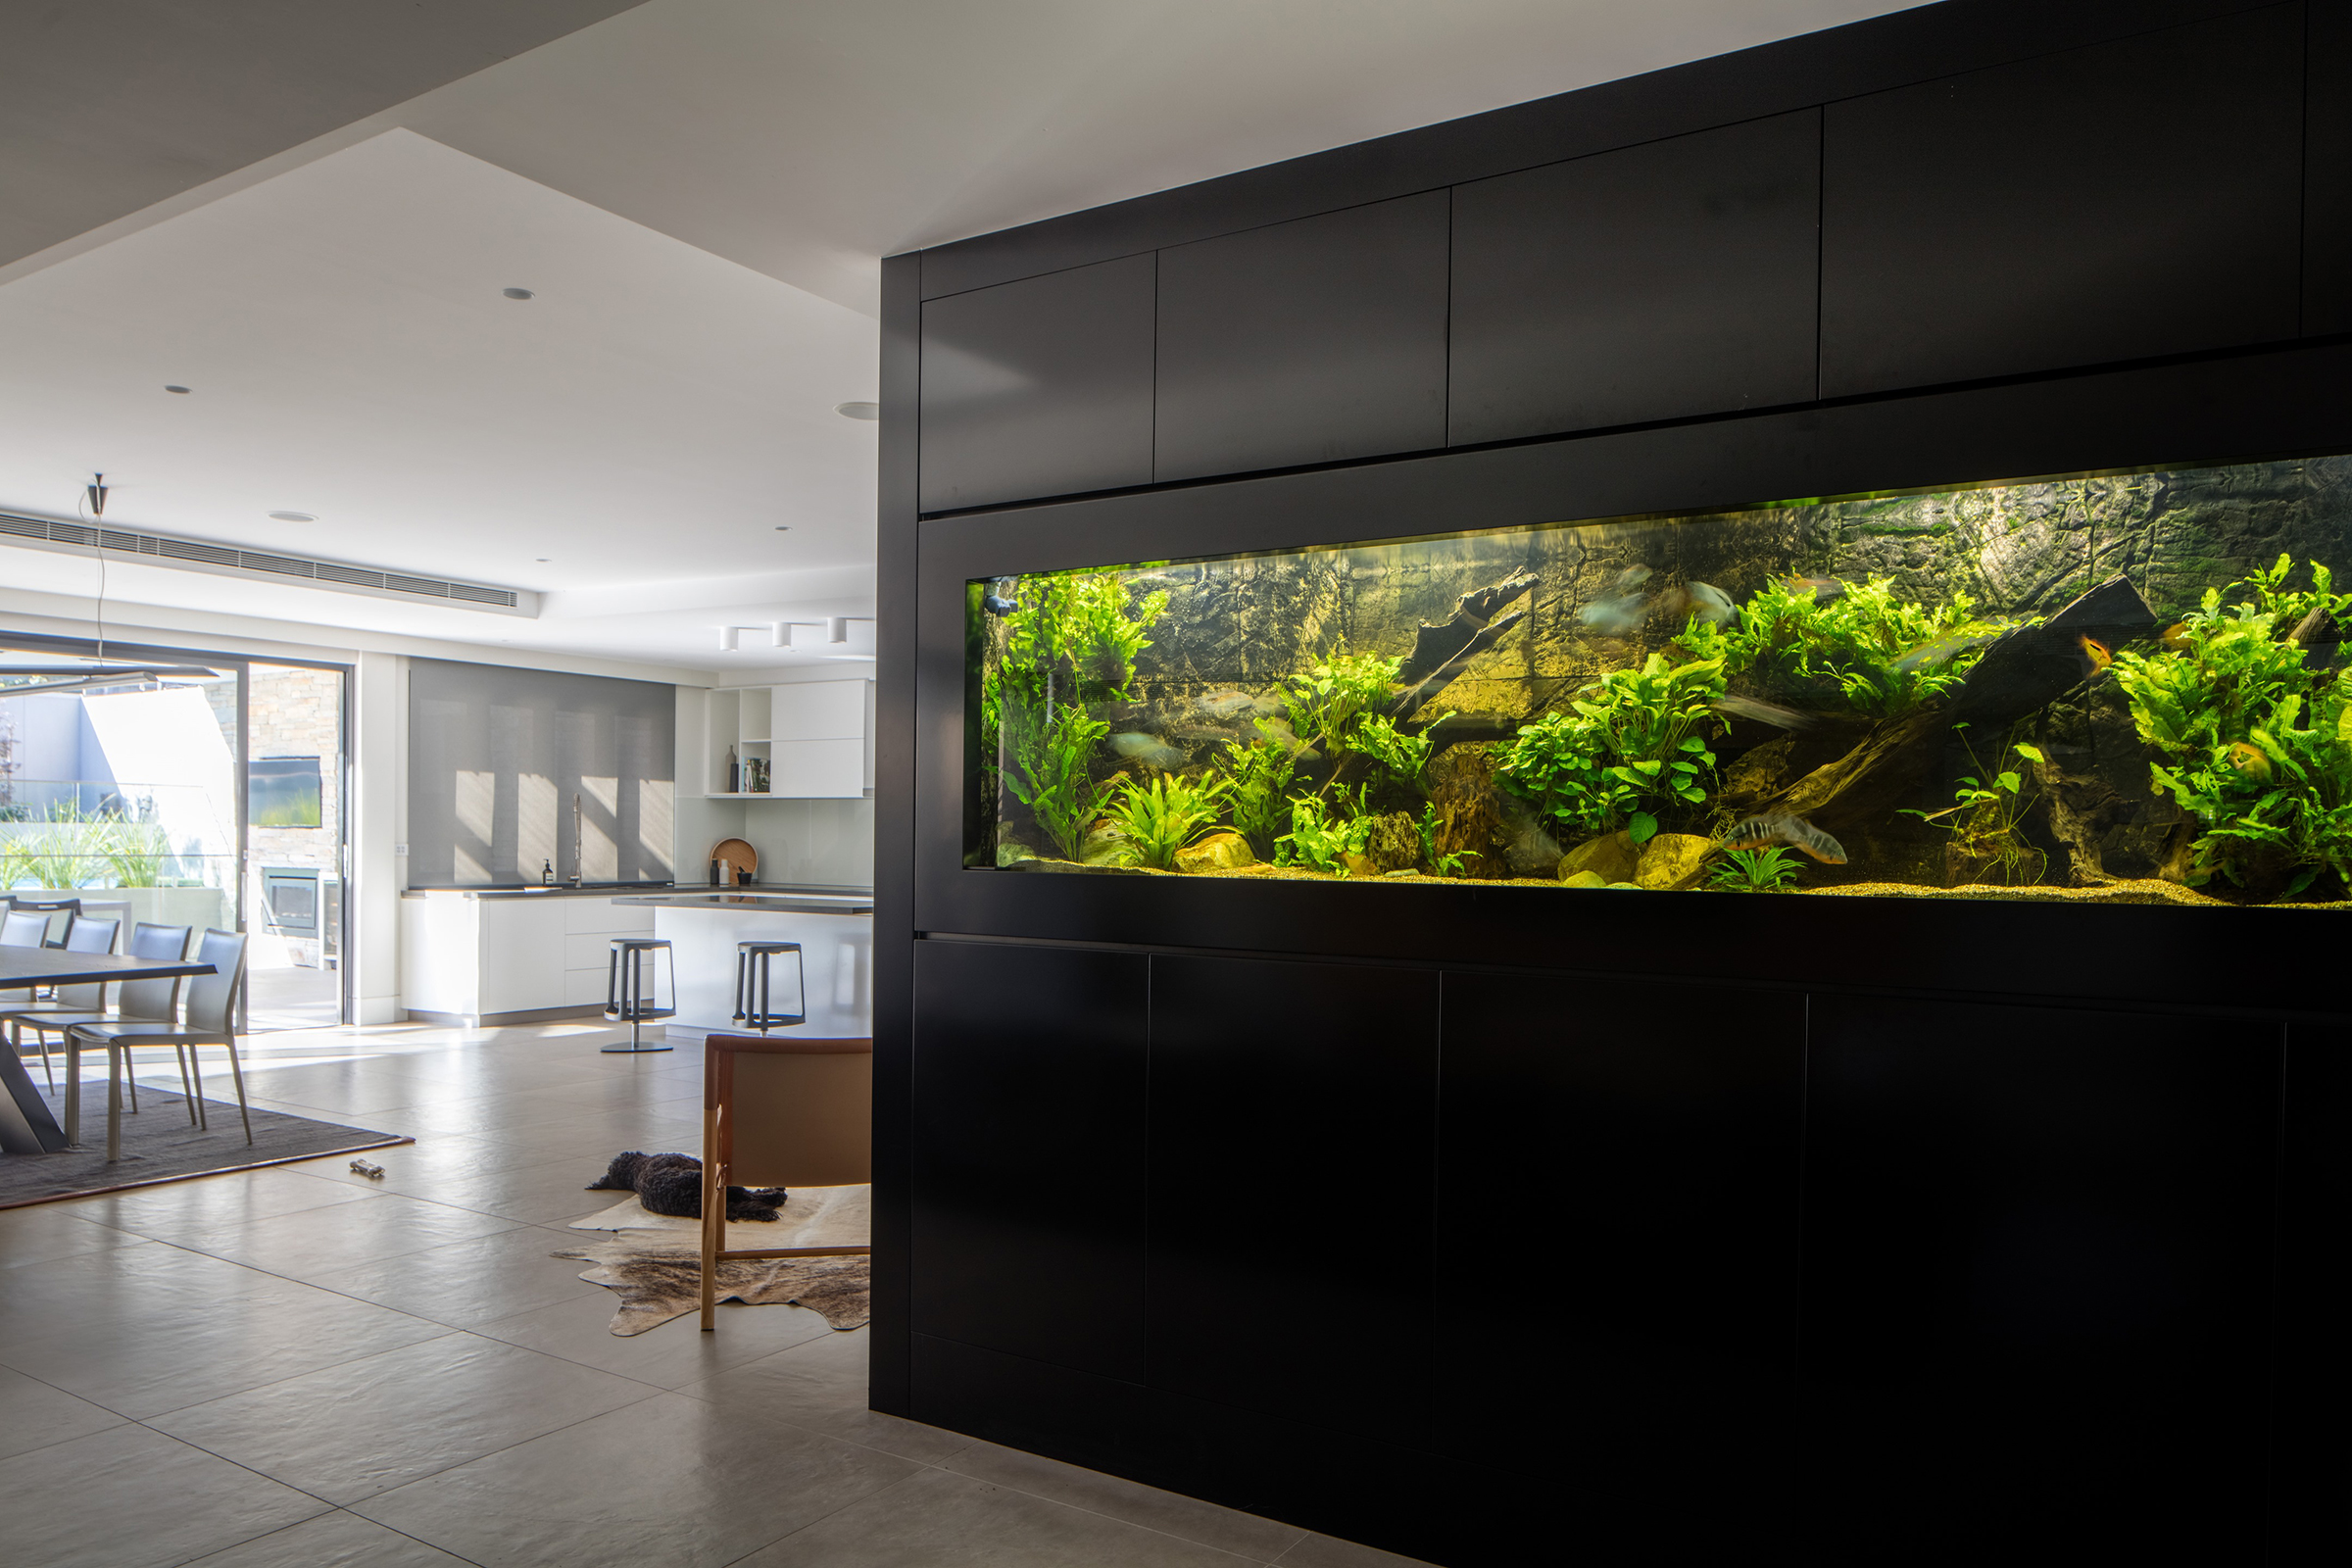 Five Reasons Having An Aquarium Improves Your Interior Design 1 